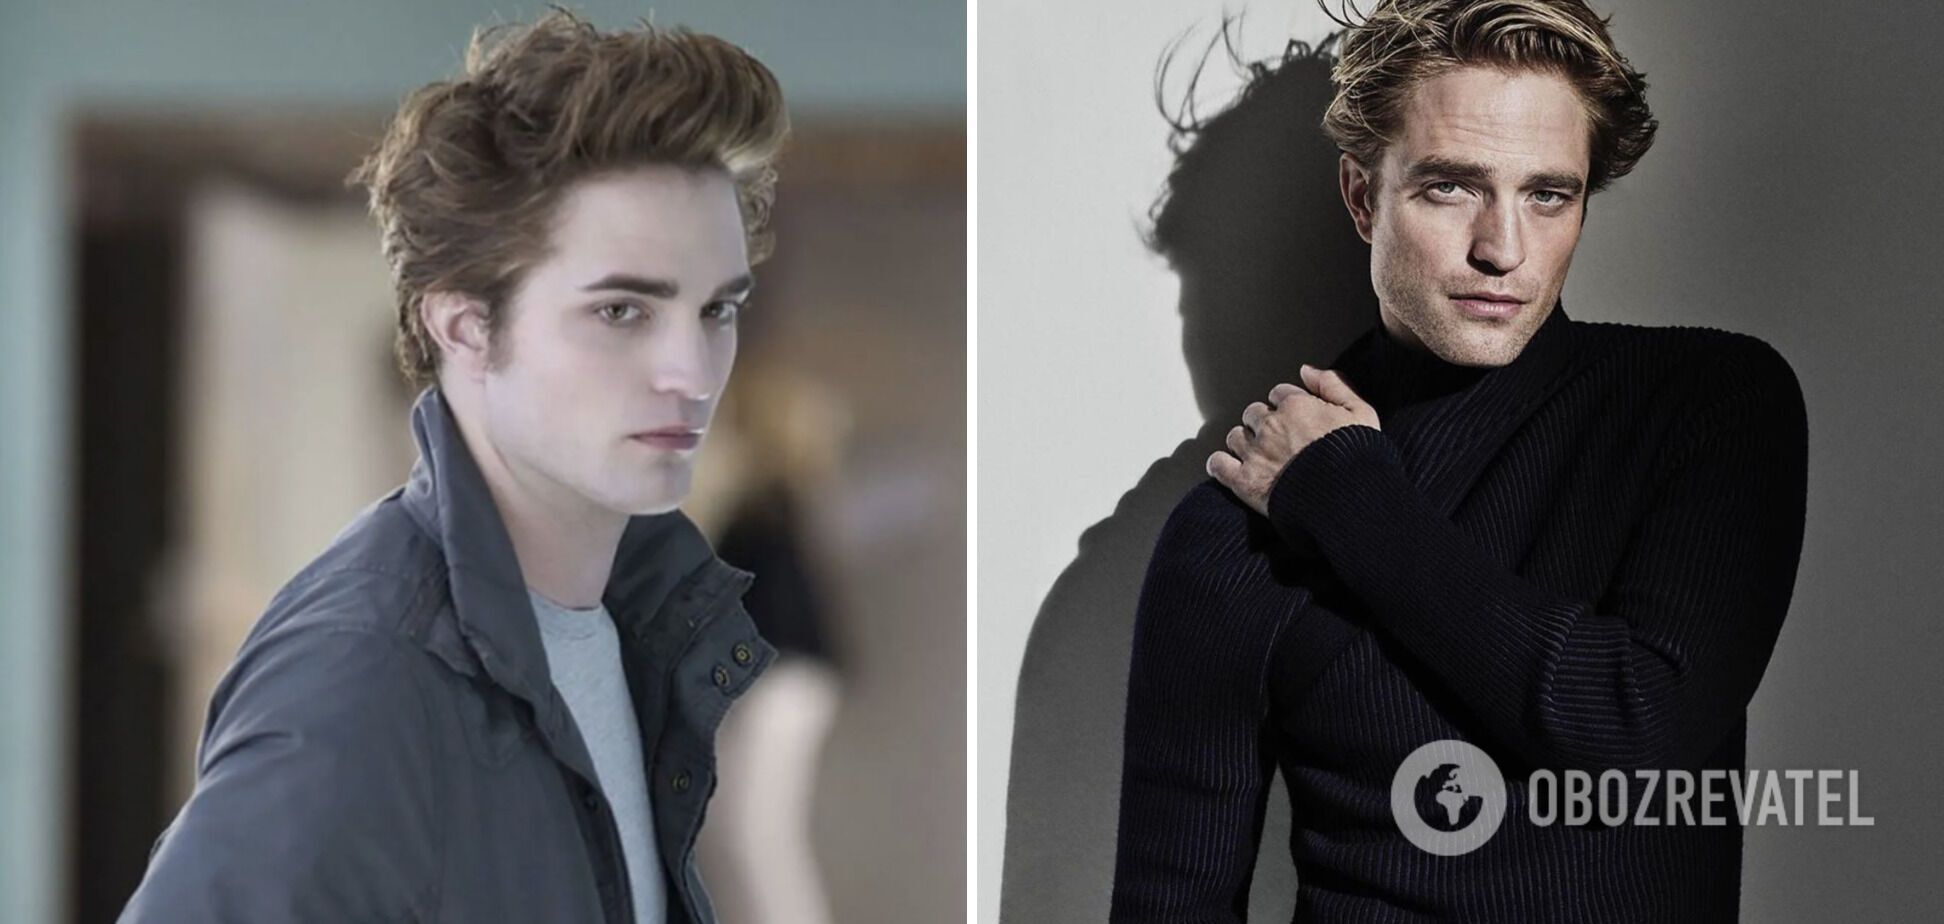 Pattinson has become Hollywood's sex symbol